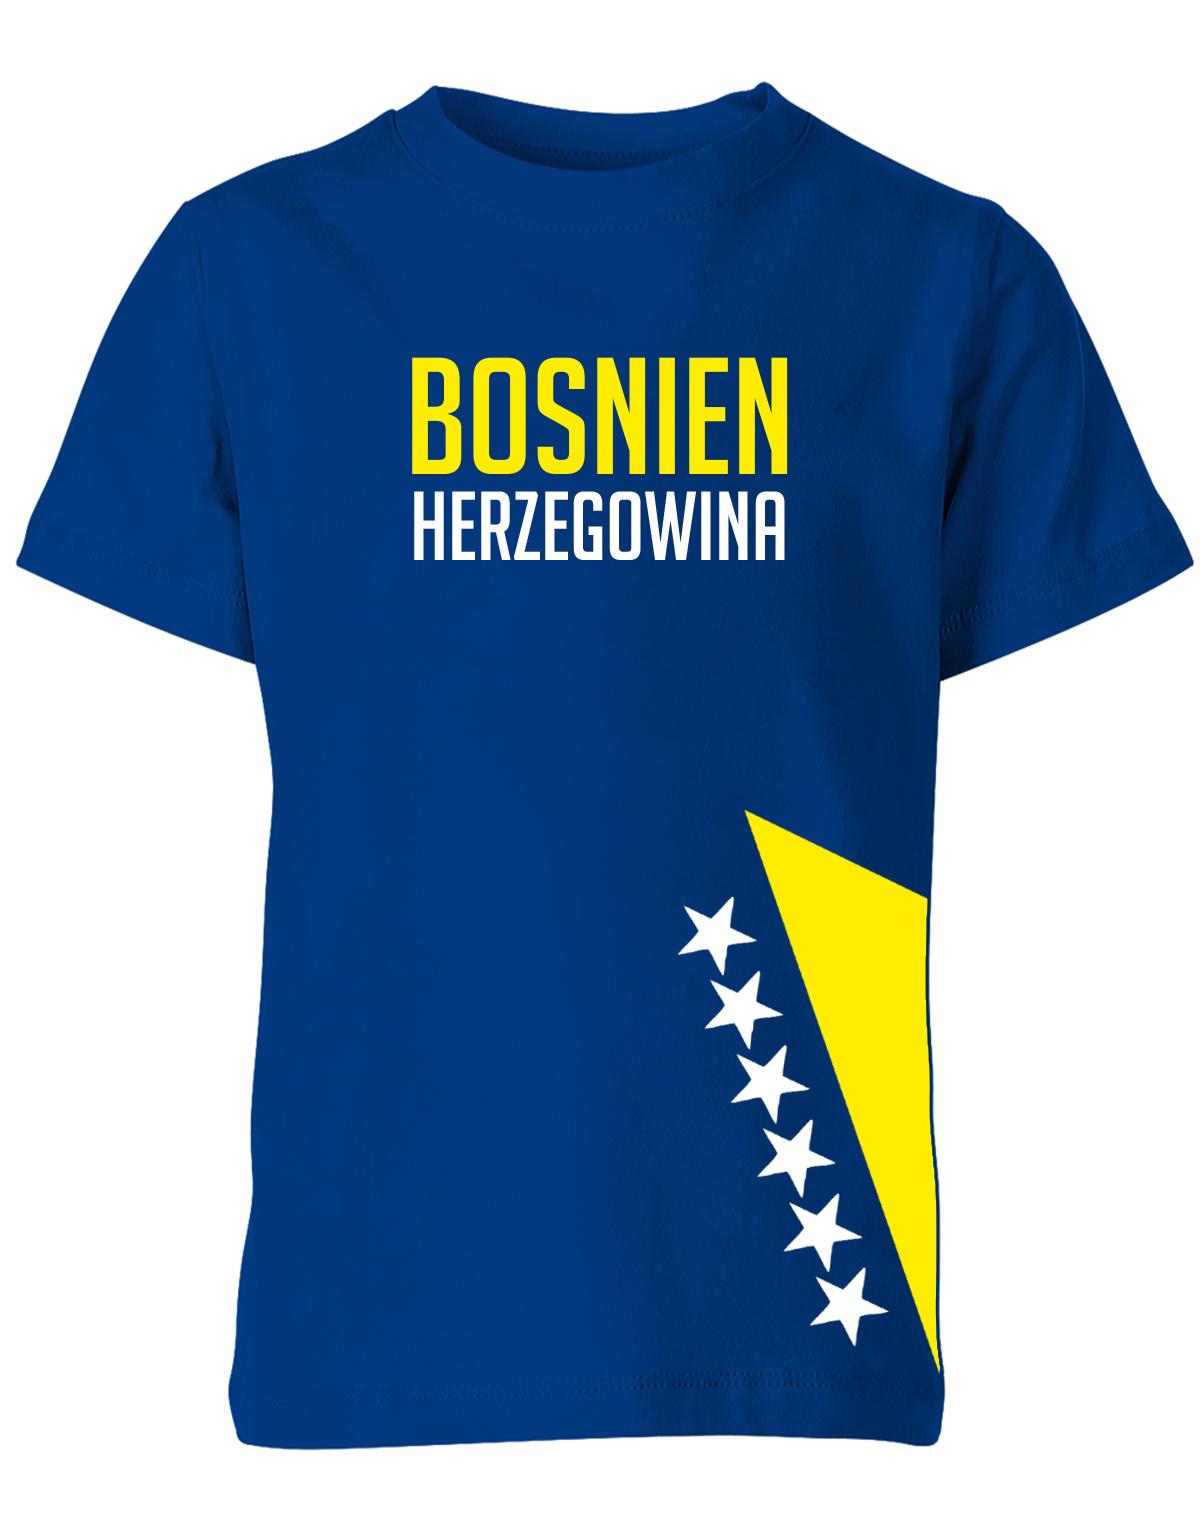 Bosnien-herzegowina-Kinder-Shirt-Royalblau